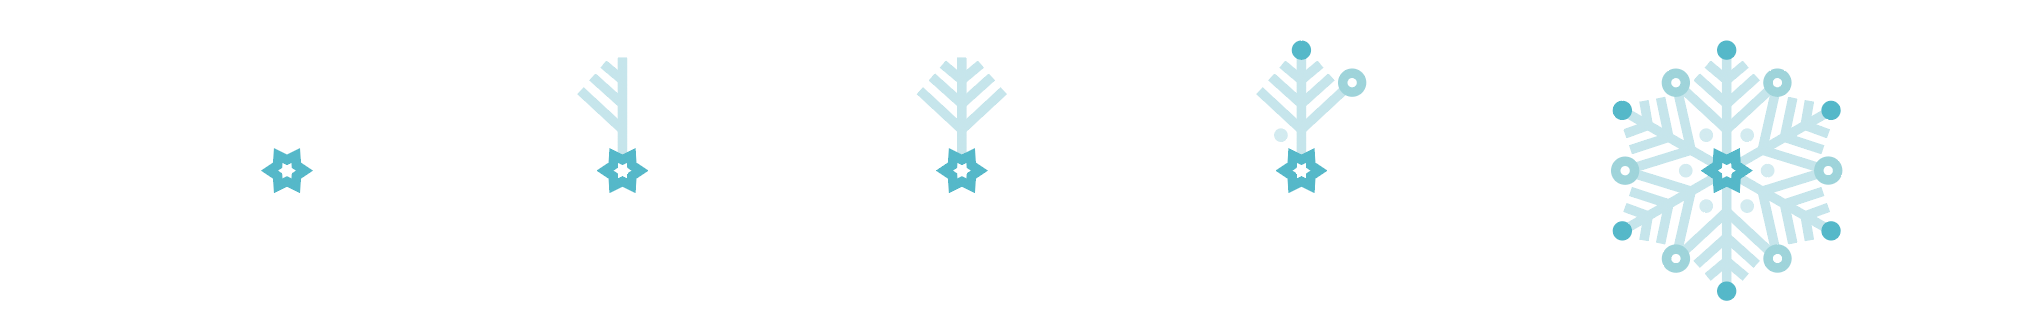 Create a Snowflake in Adobe Illustrator